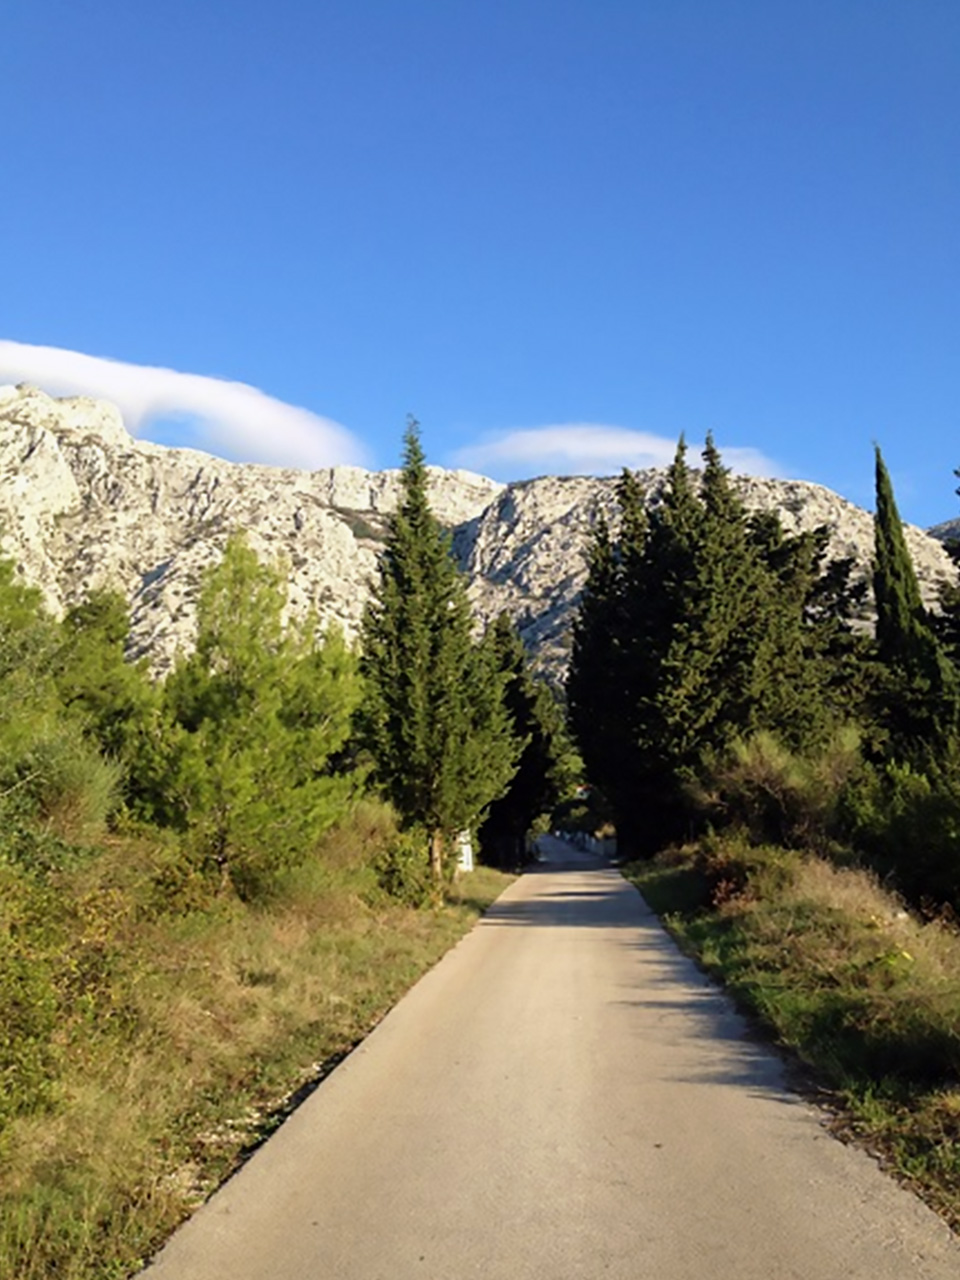 Uska cesta s bogatom vegetacijom s obje strane dok se u pozadini nazire planina.